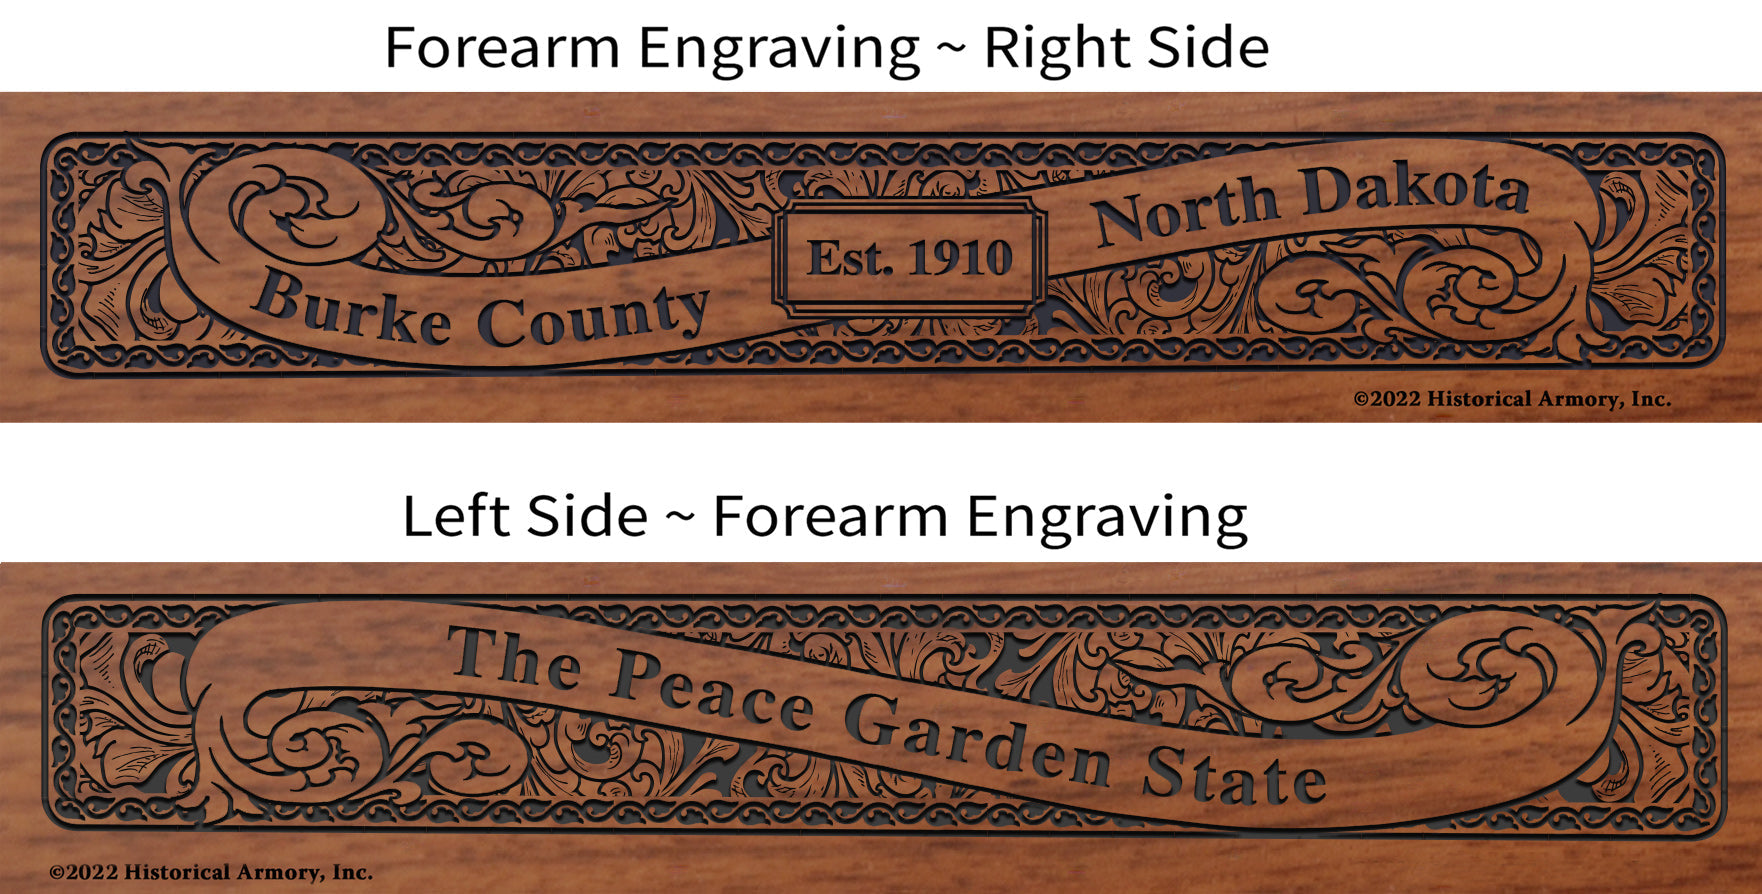 Burke County North Dakota Engraved Rifle Forearm